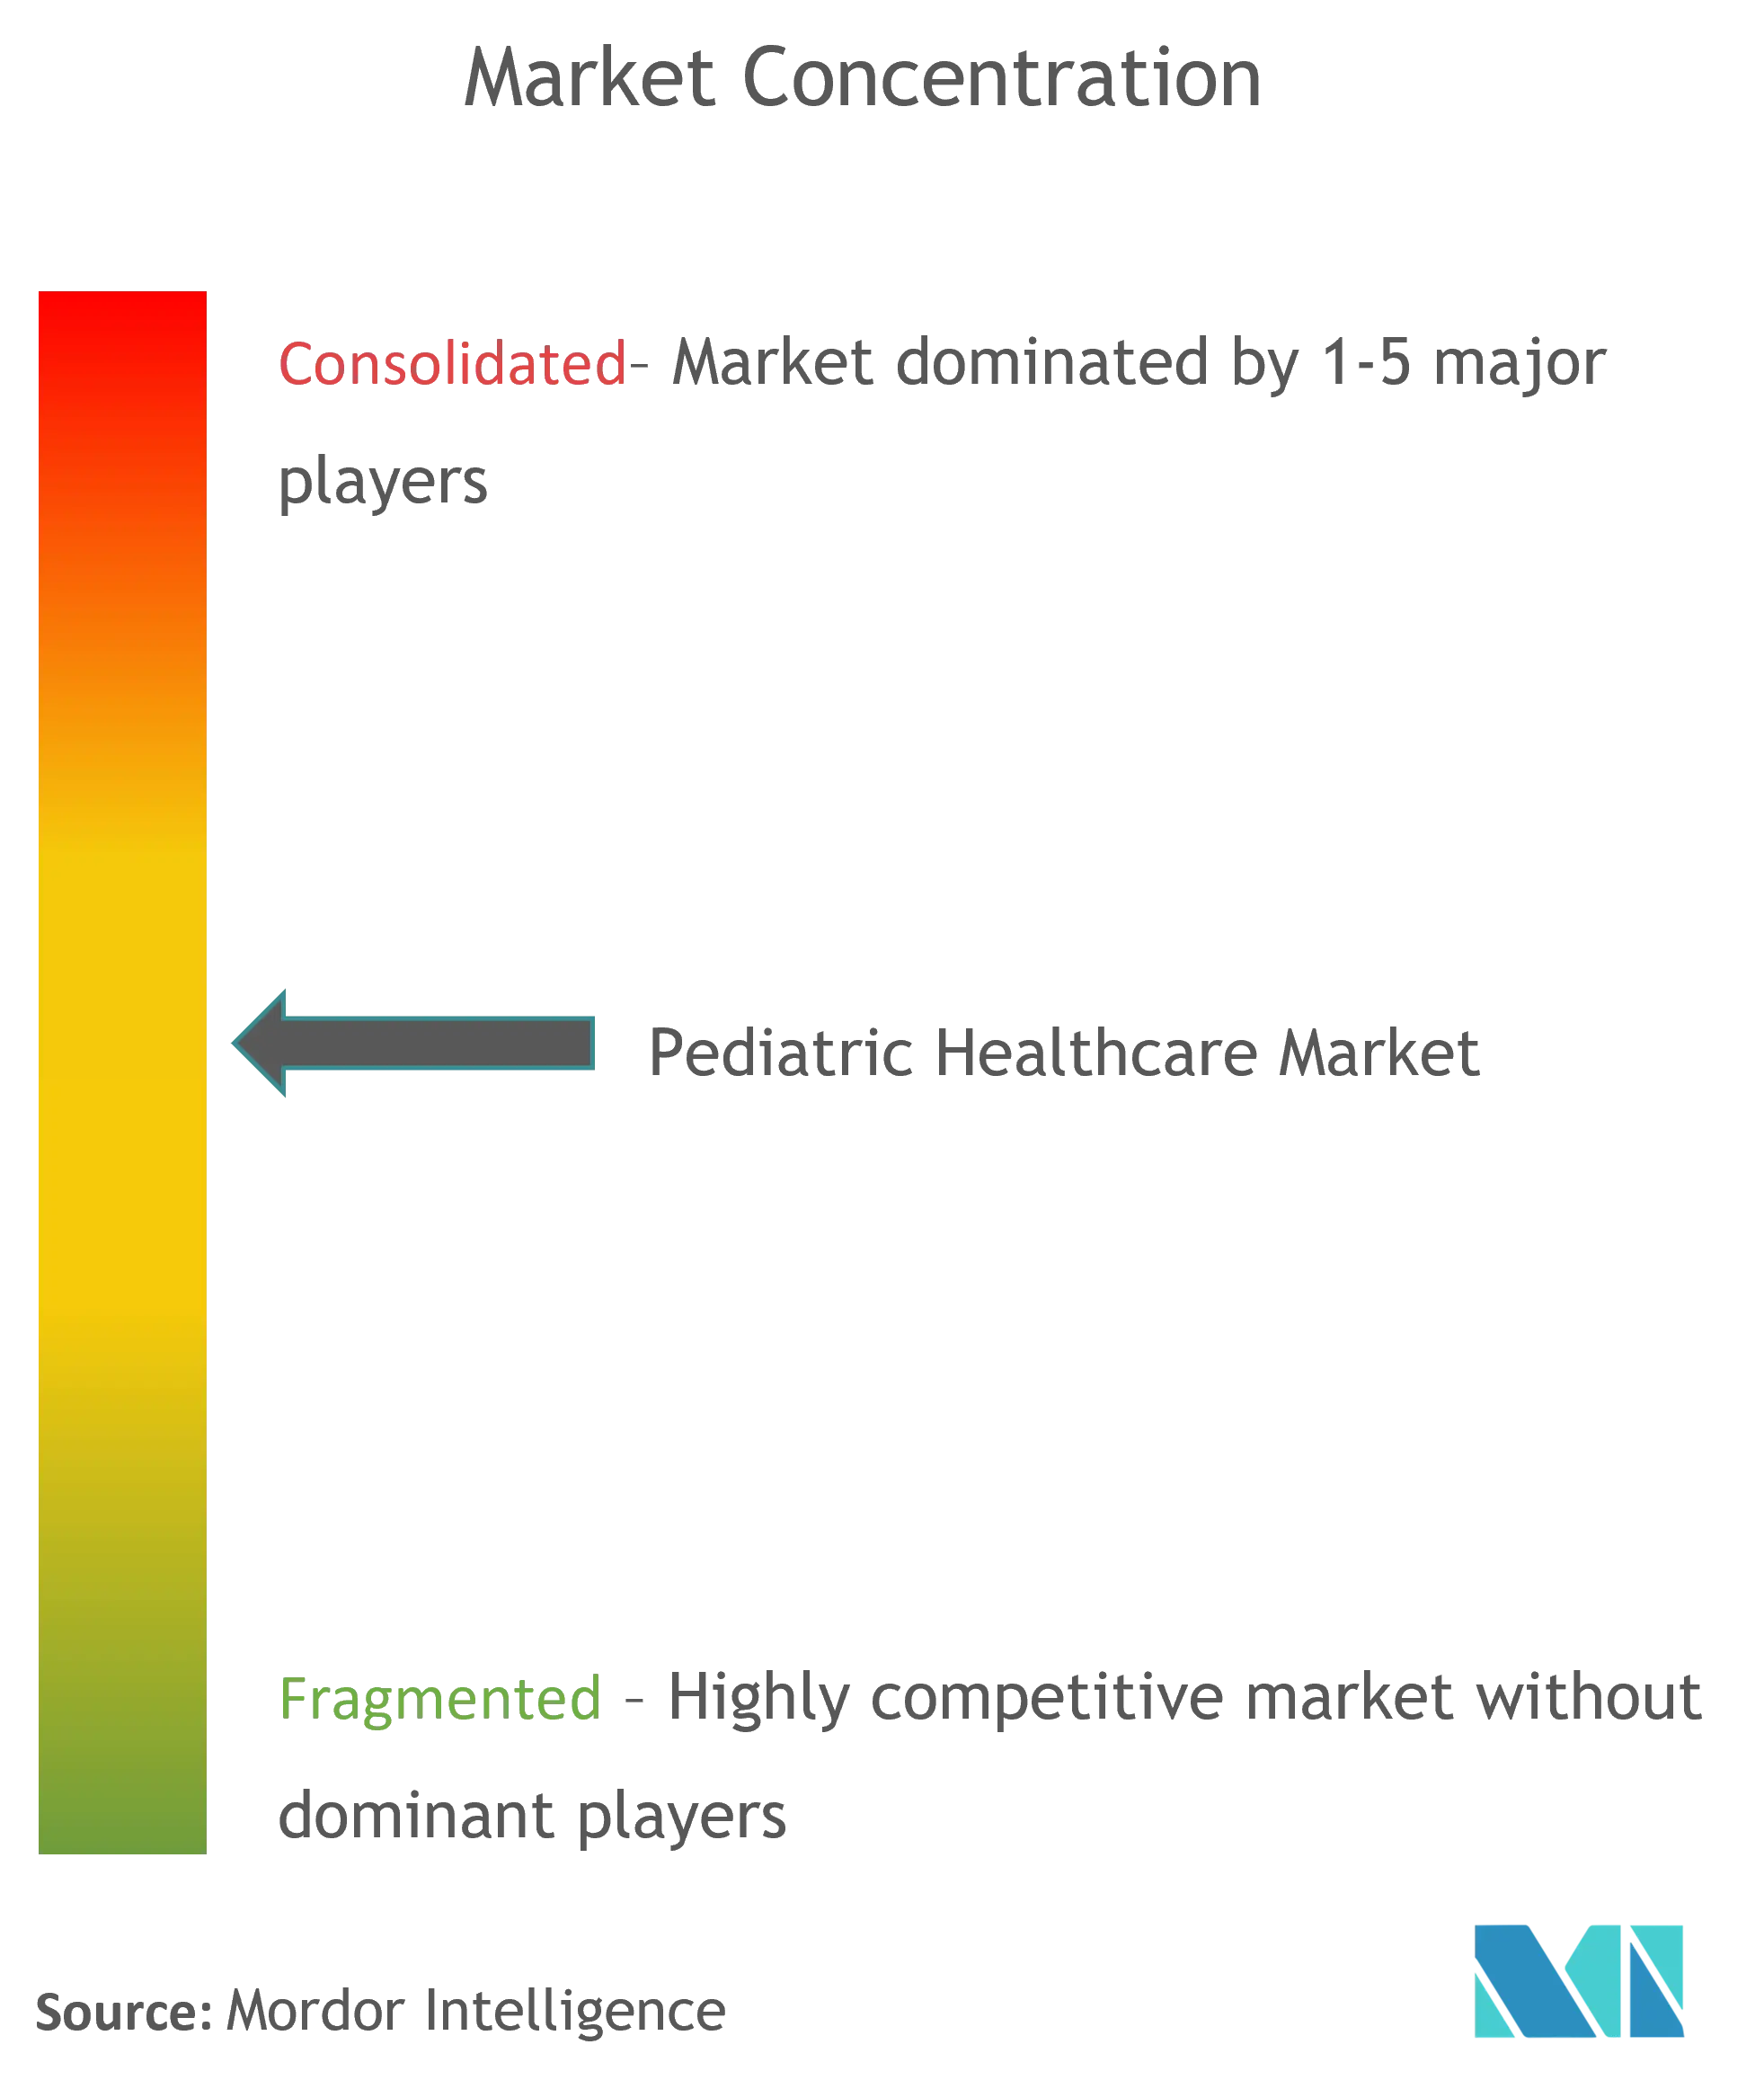 Pediatric Healthcare Market Concentration